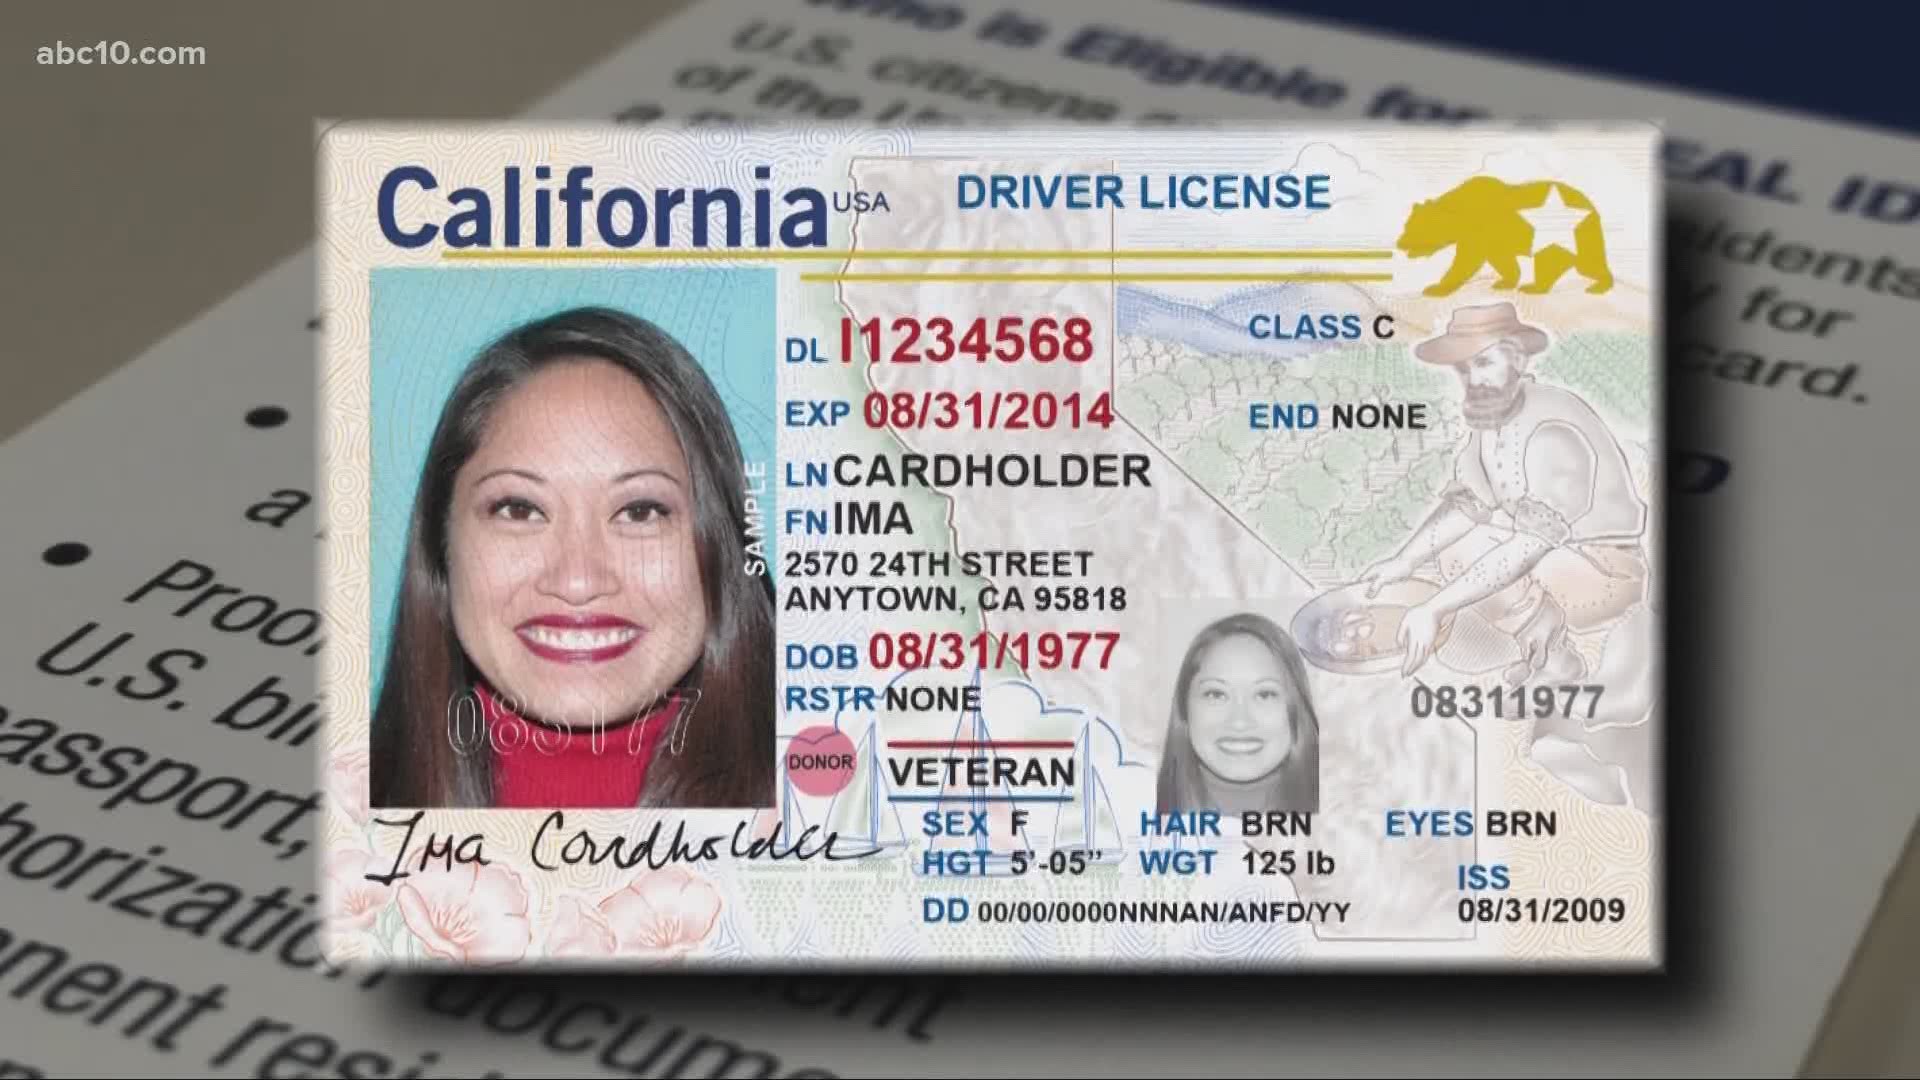 DMV extends expiration dates for licenses, IDs